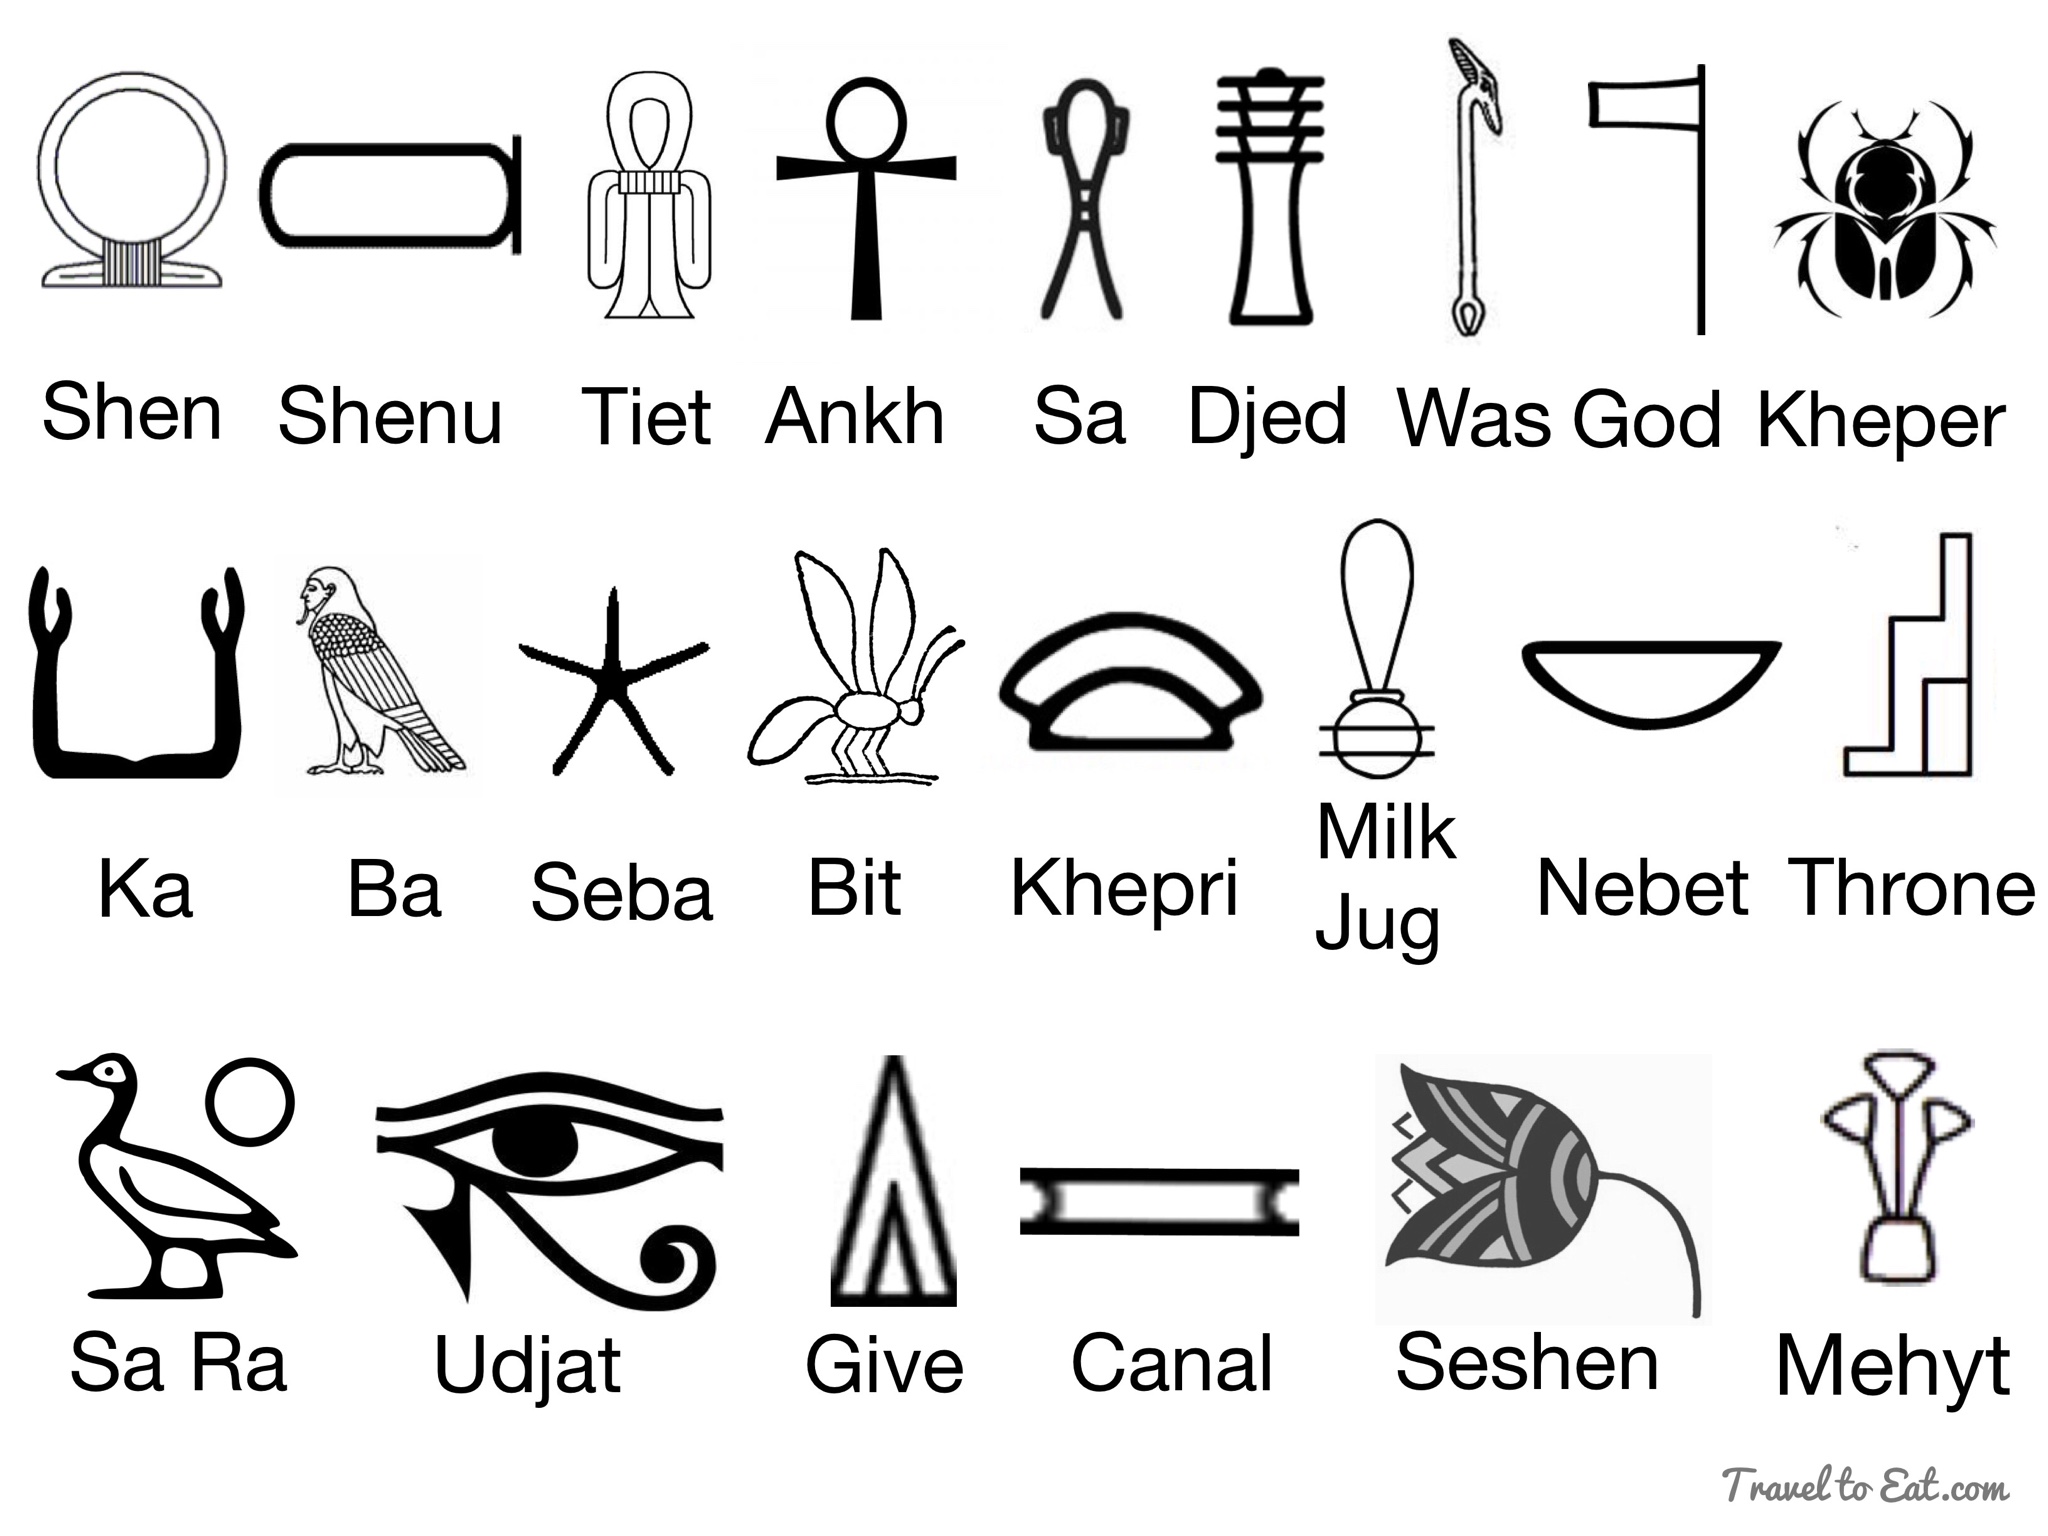 materials-egyptian-hieroglyphs-fae-world-lost-girl-wiki-fandom